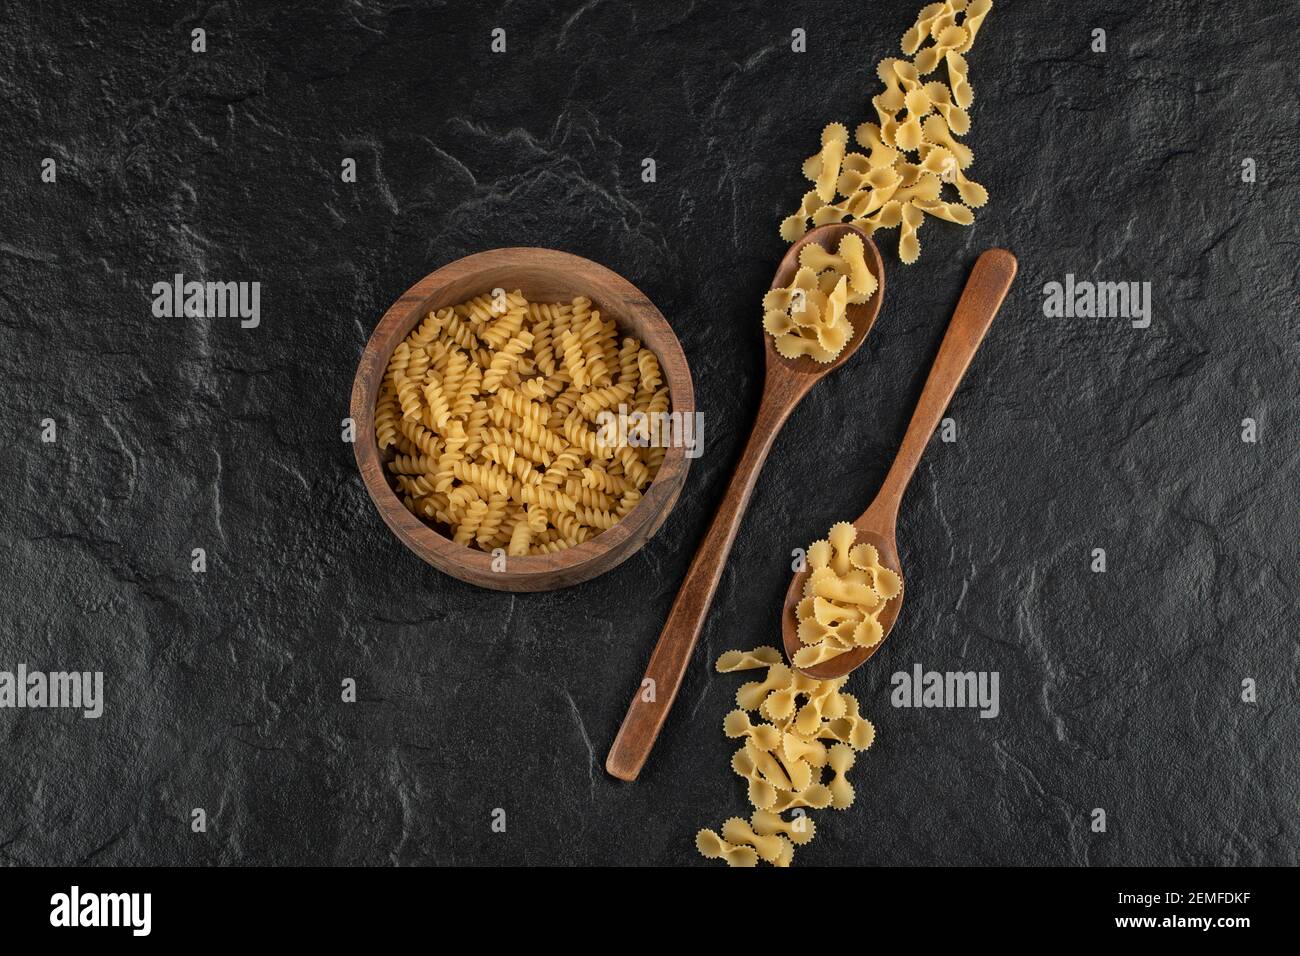 A wooden bowl full of raw girandole pasta Stock Photo